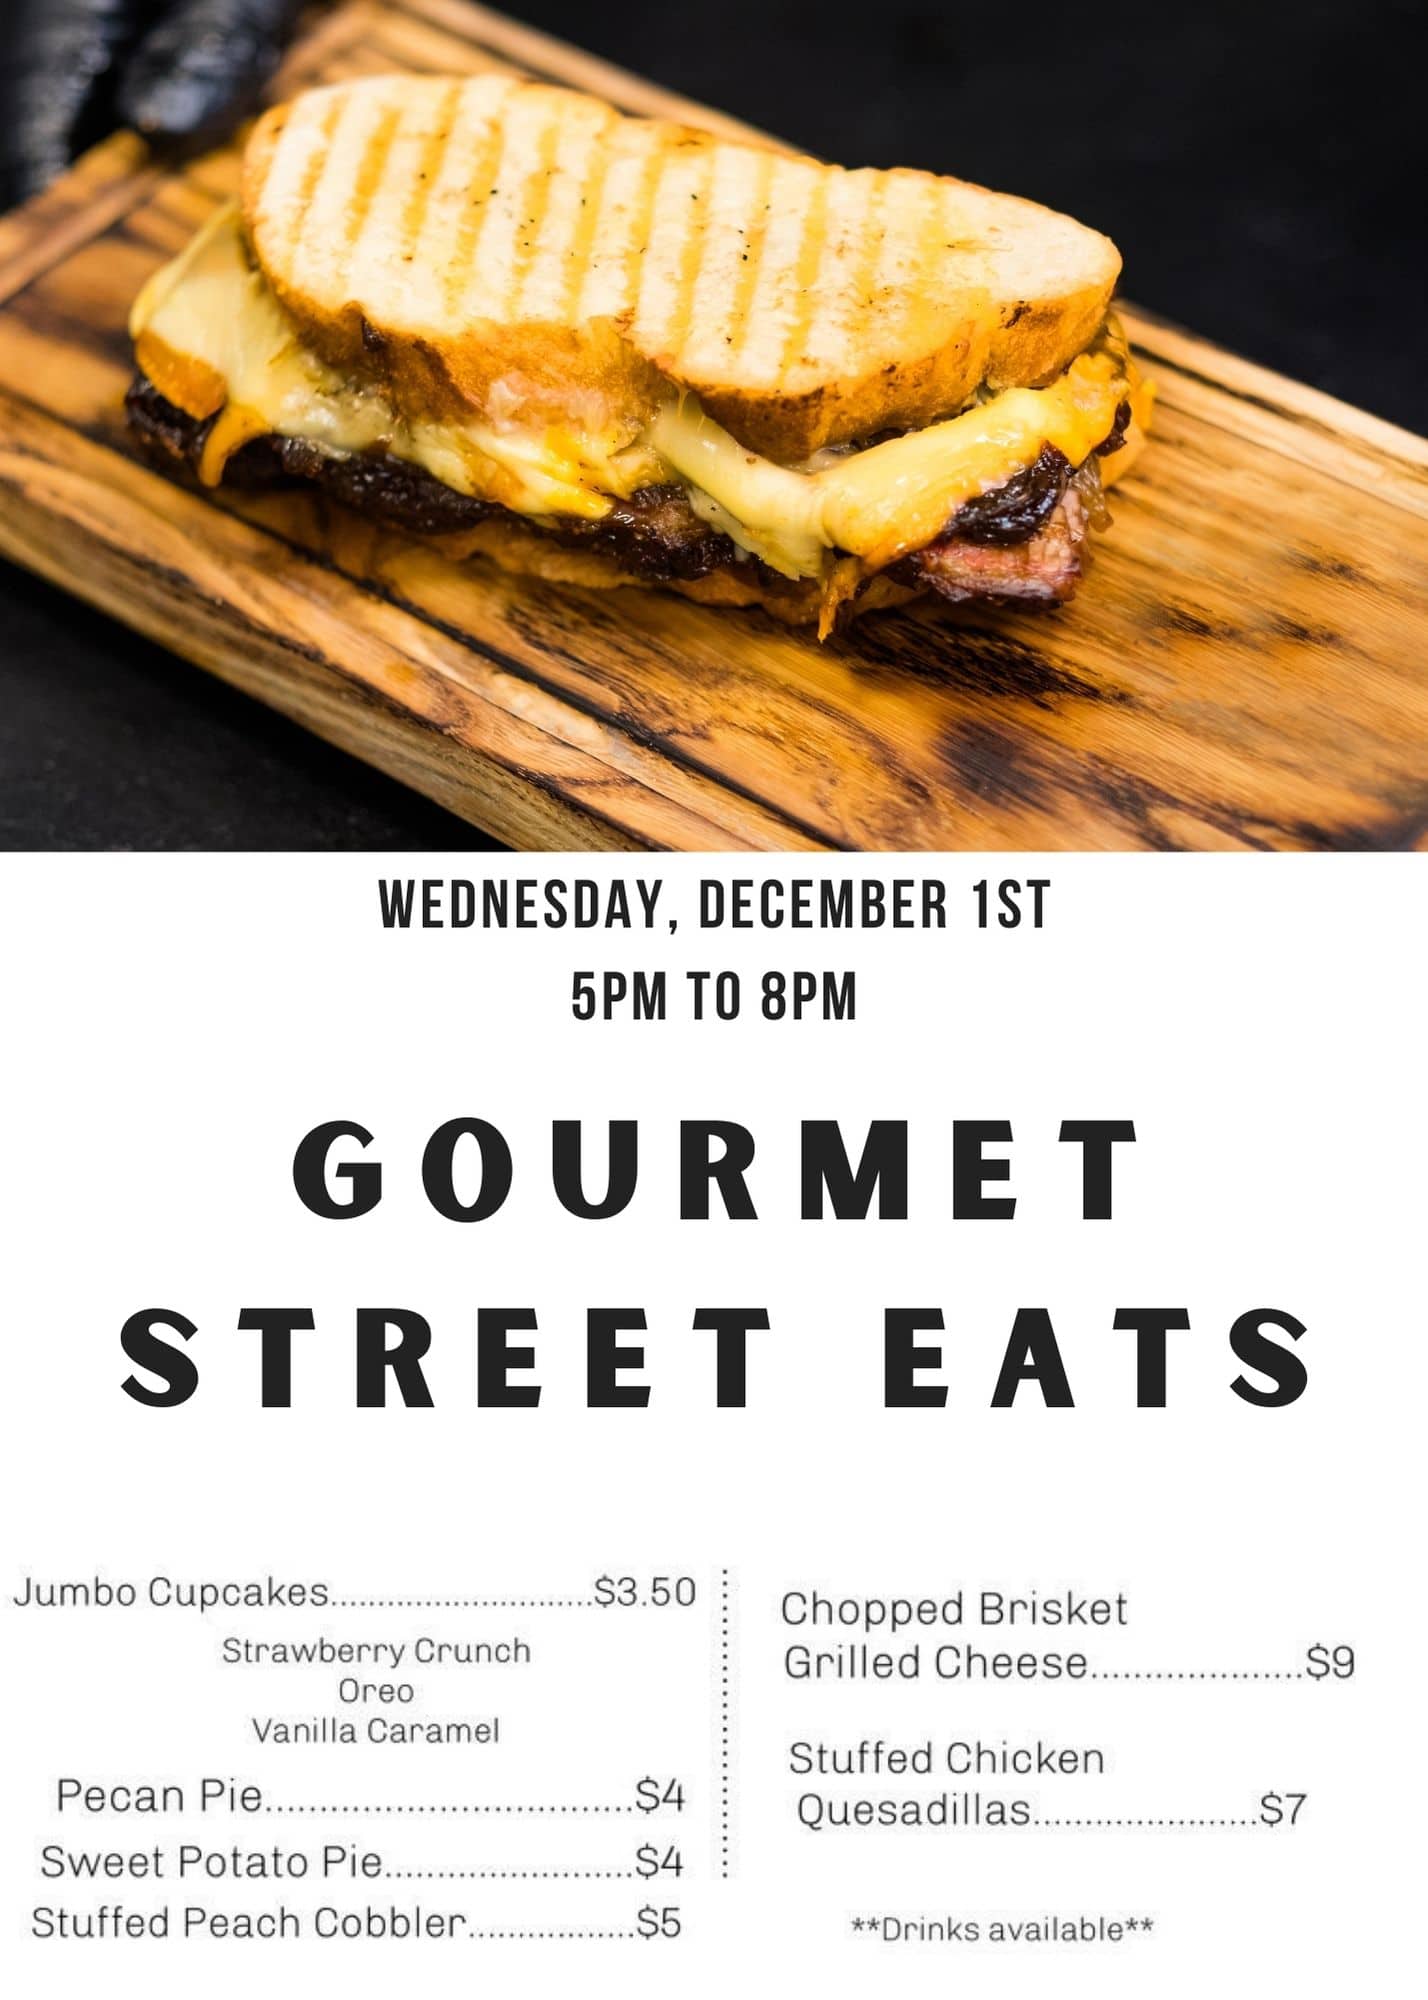 A flyer featuring gourmet street eats in The Woodlands, TX.